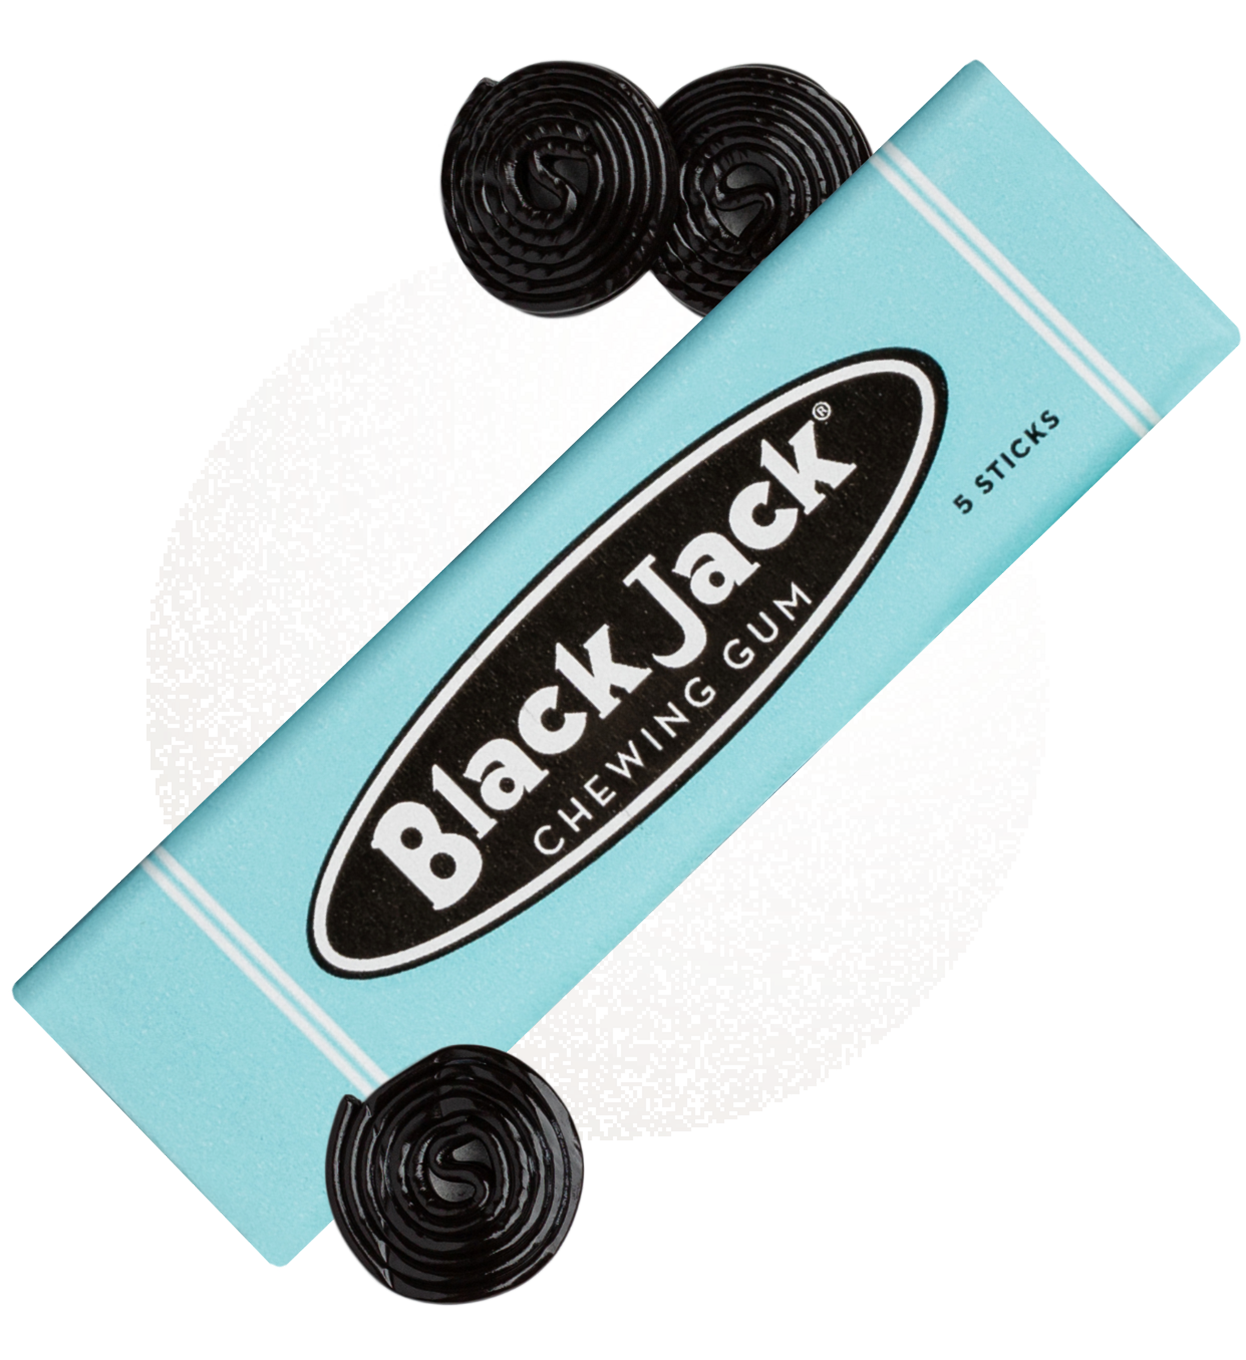 Black Black Chewing Gum Freshening and Tasty